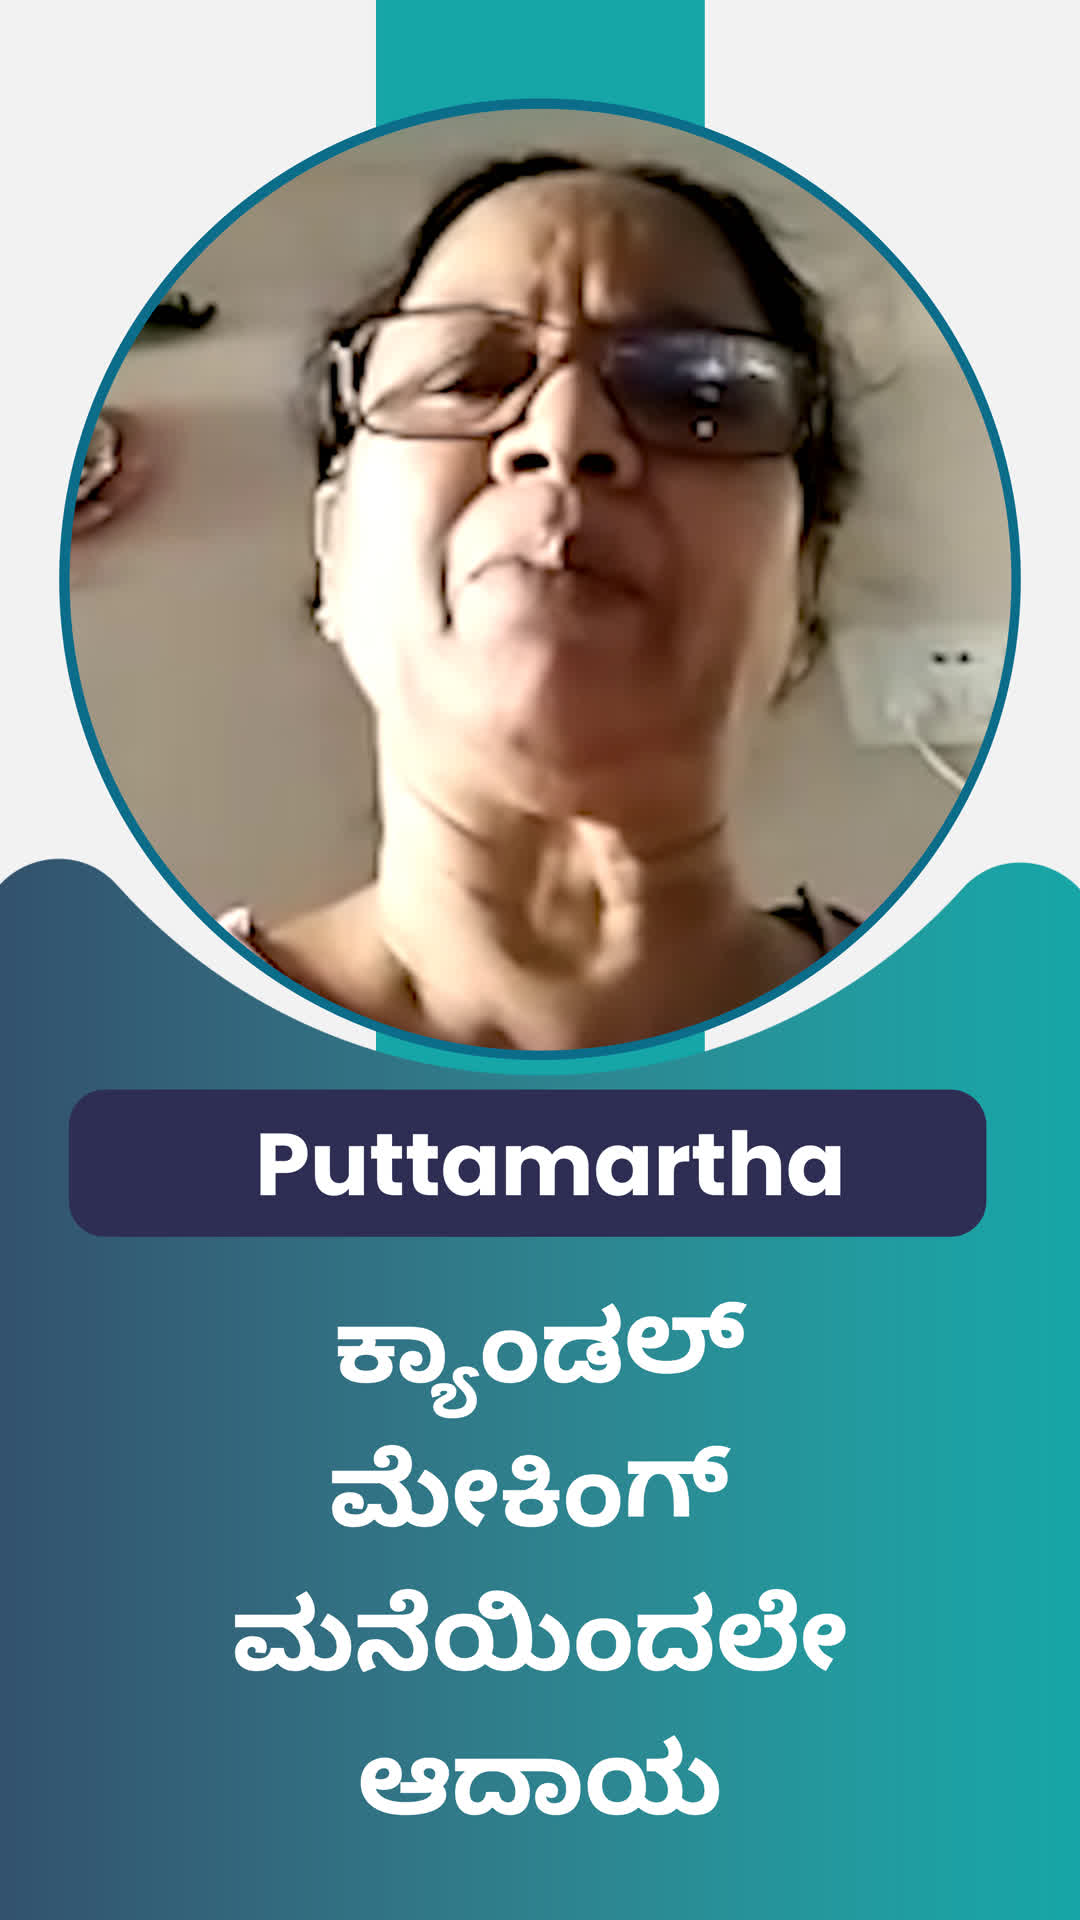 Puttamartha's Honest Review of ffreedom app - Karimnagar ,Telangana